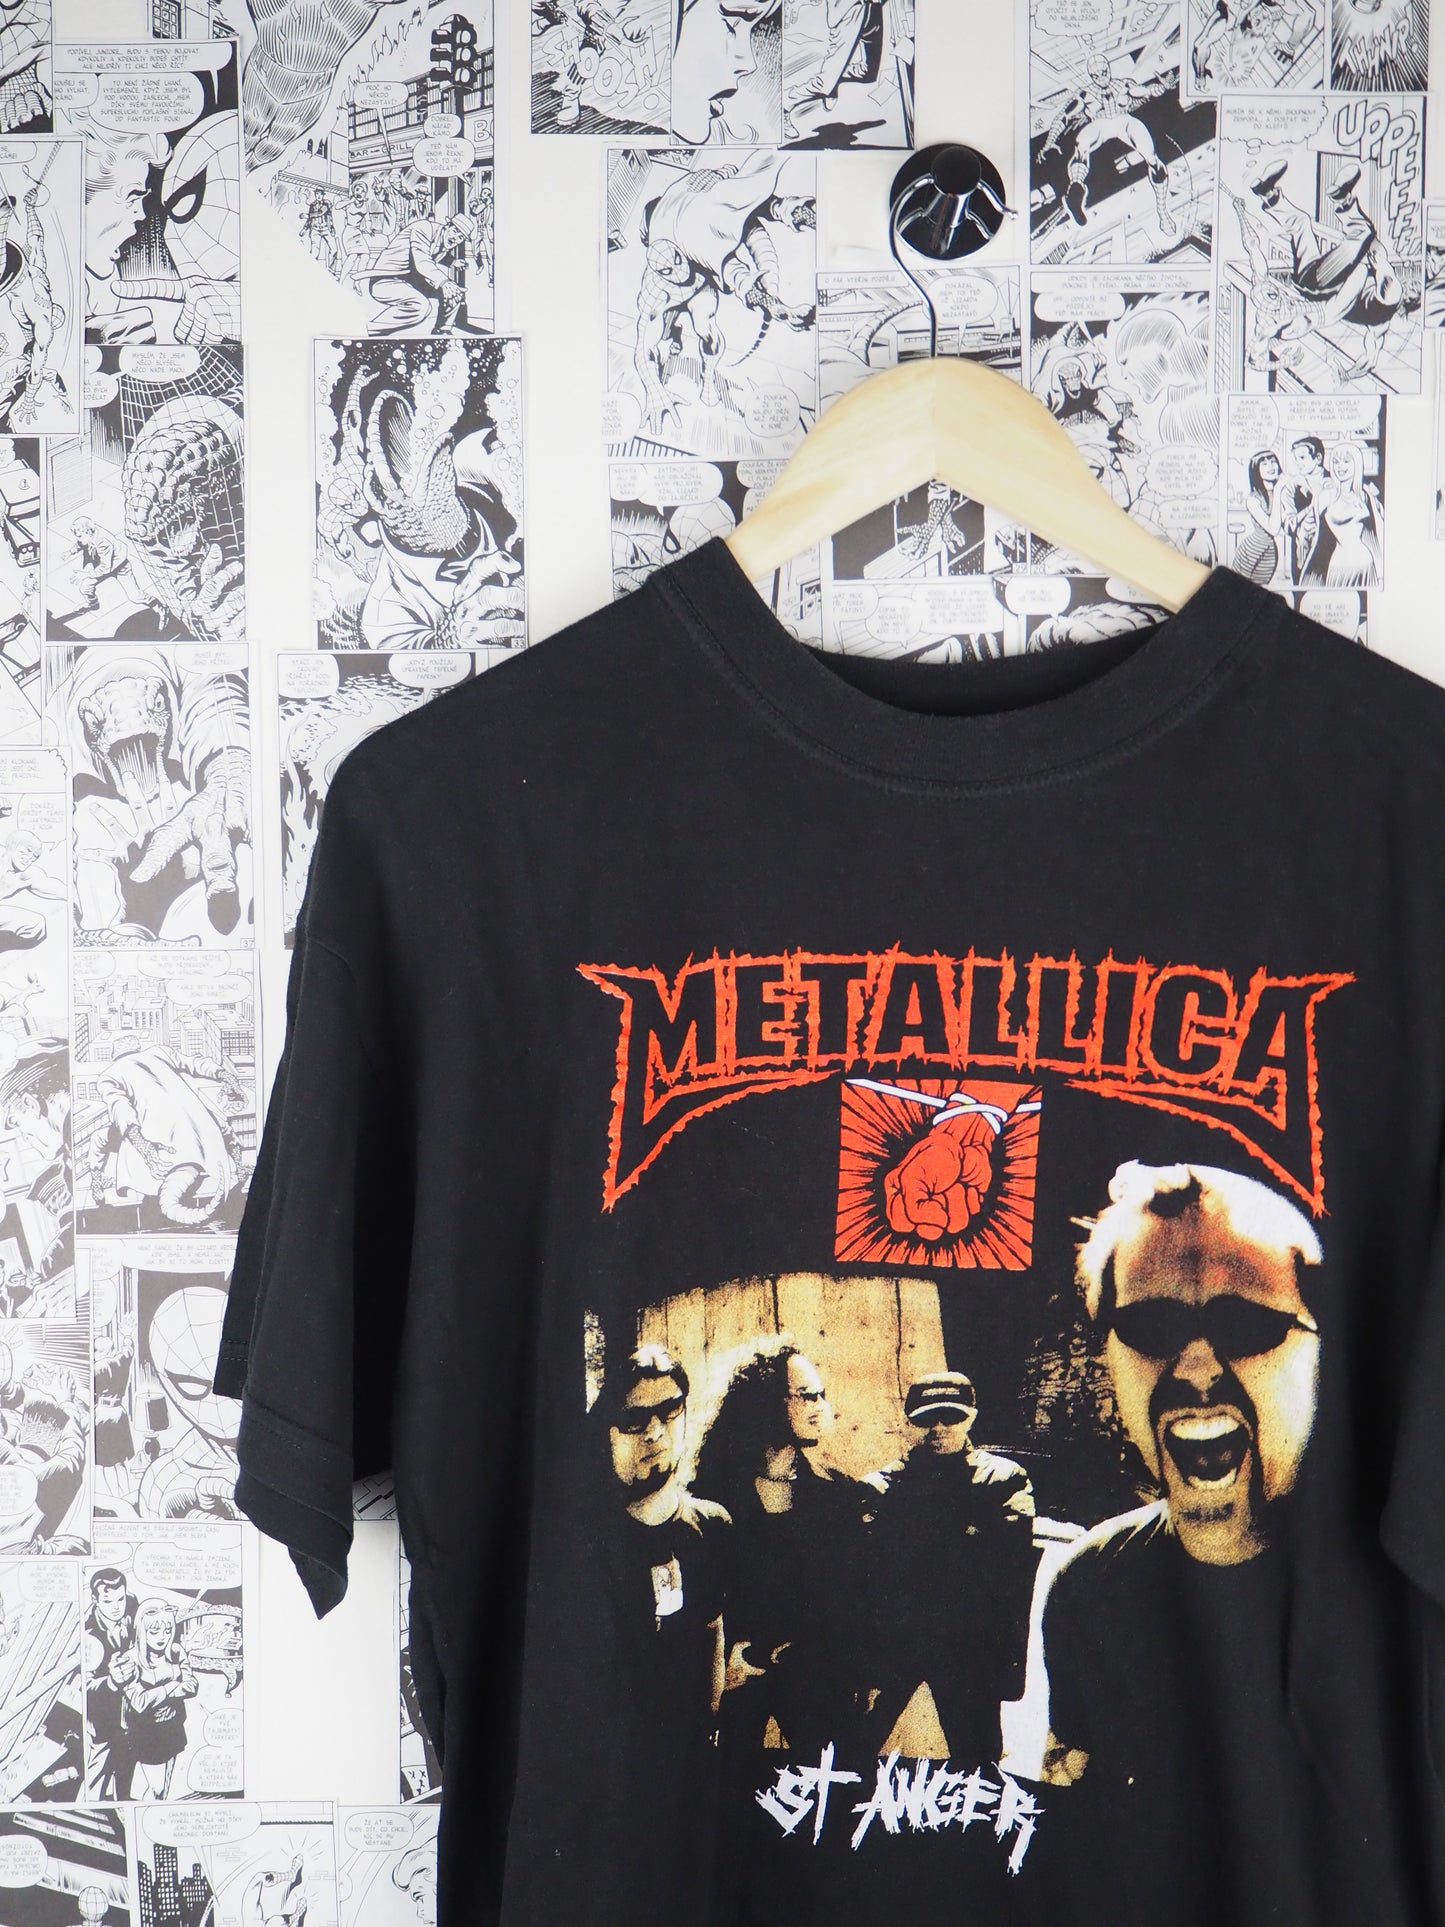 Vintage Metallica "St. Anger" 2003 t-shirt - size XL